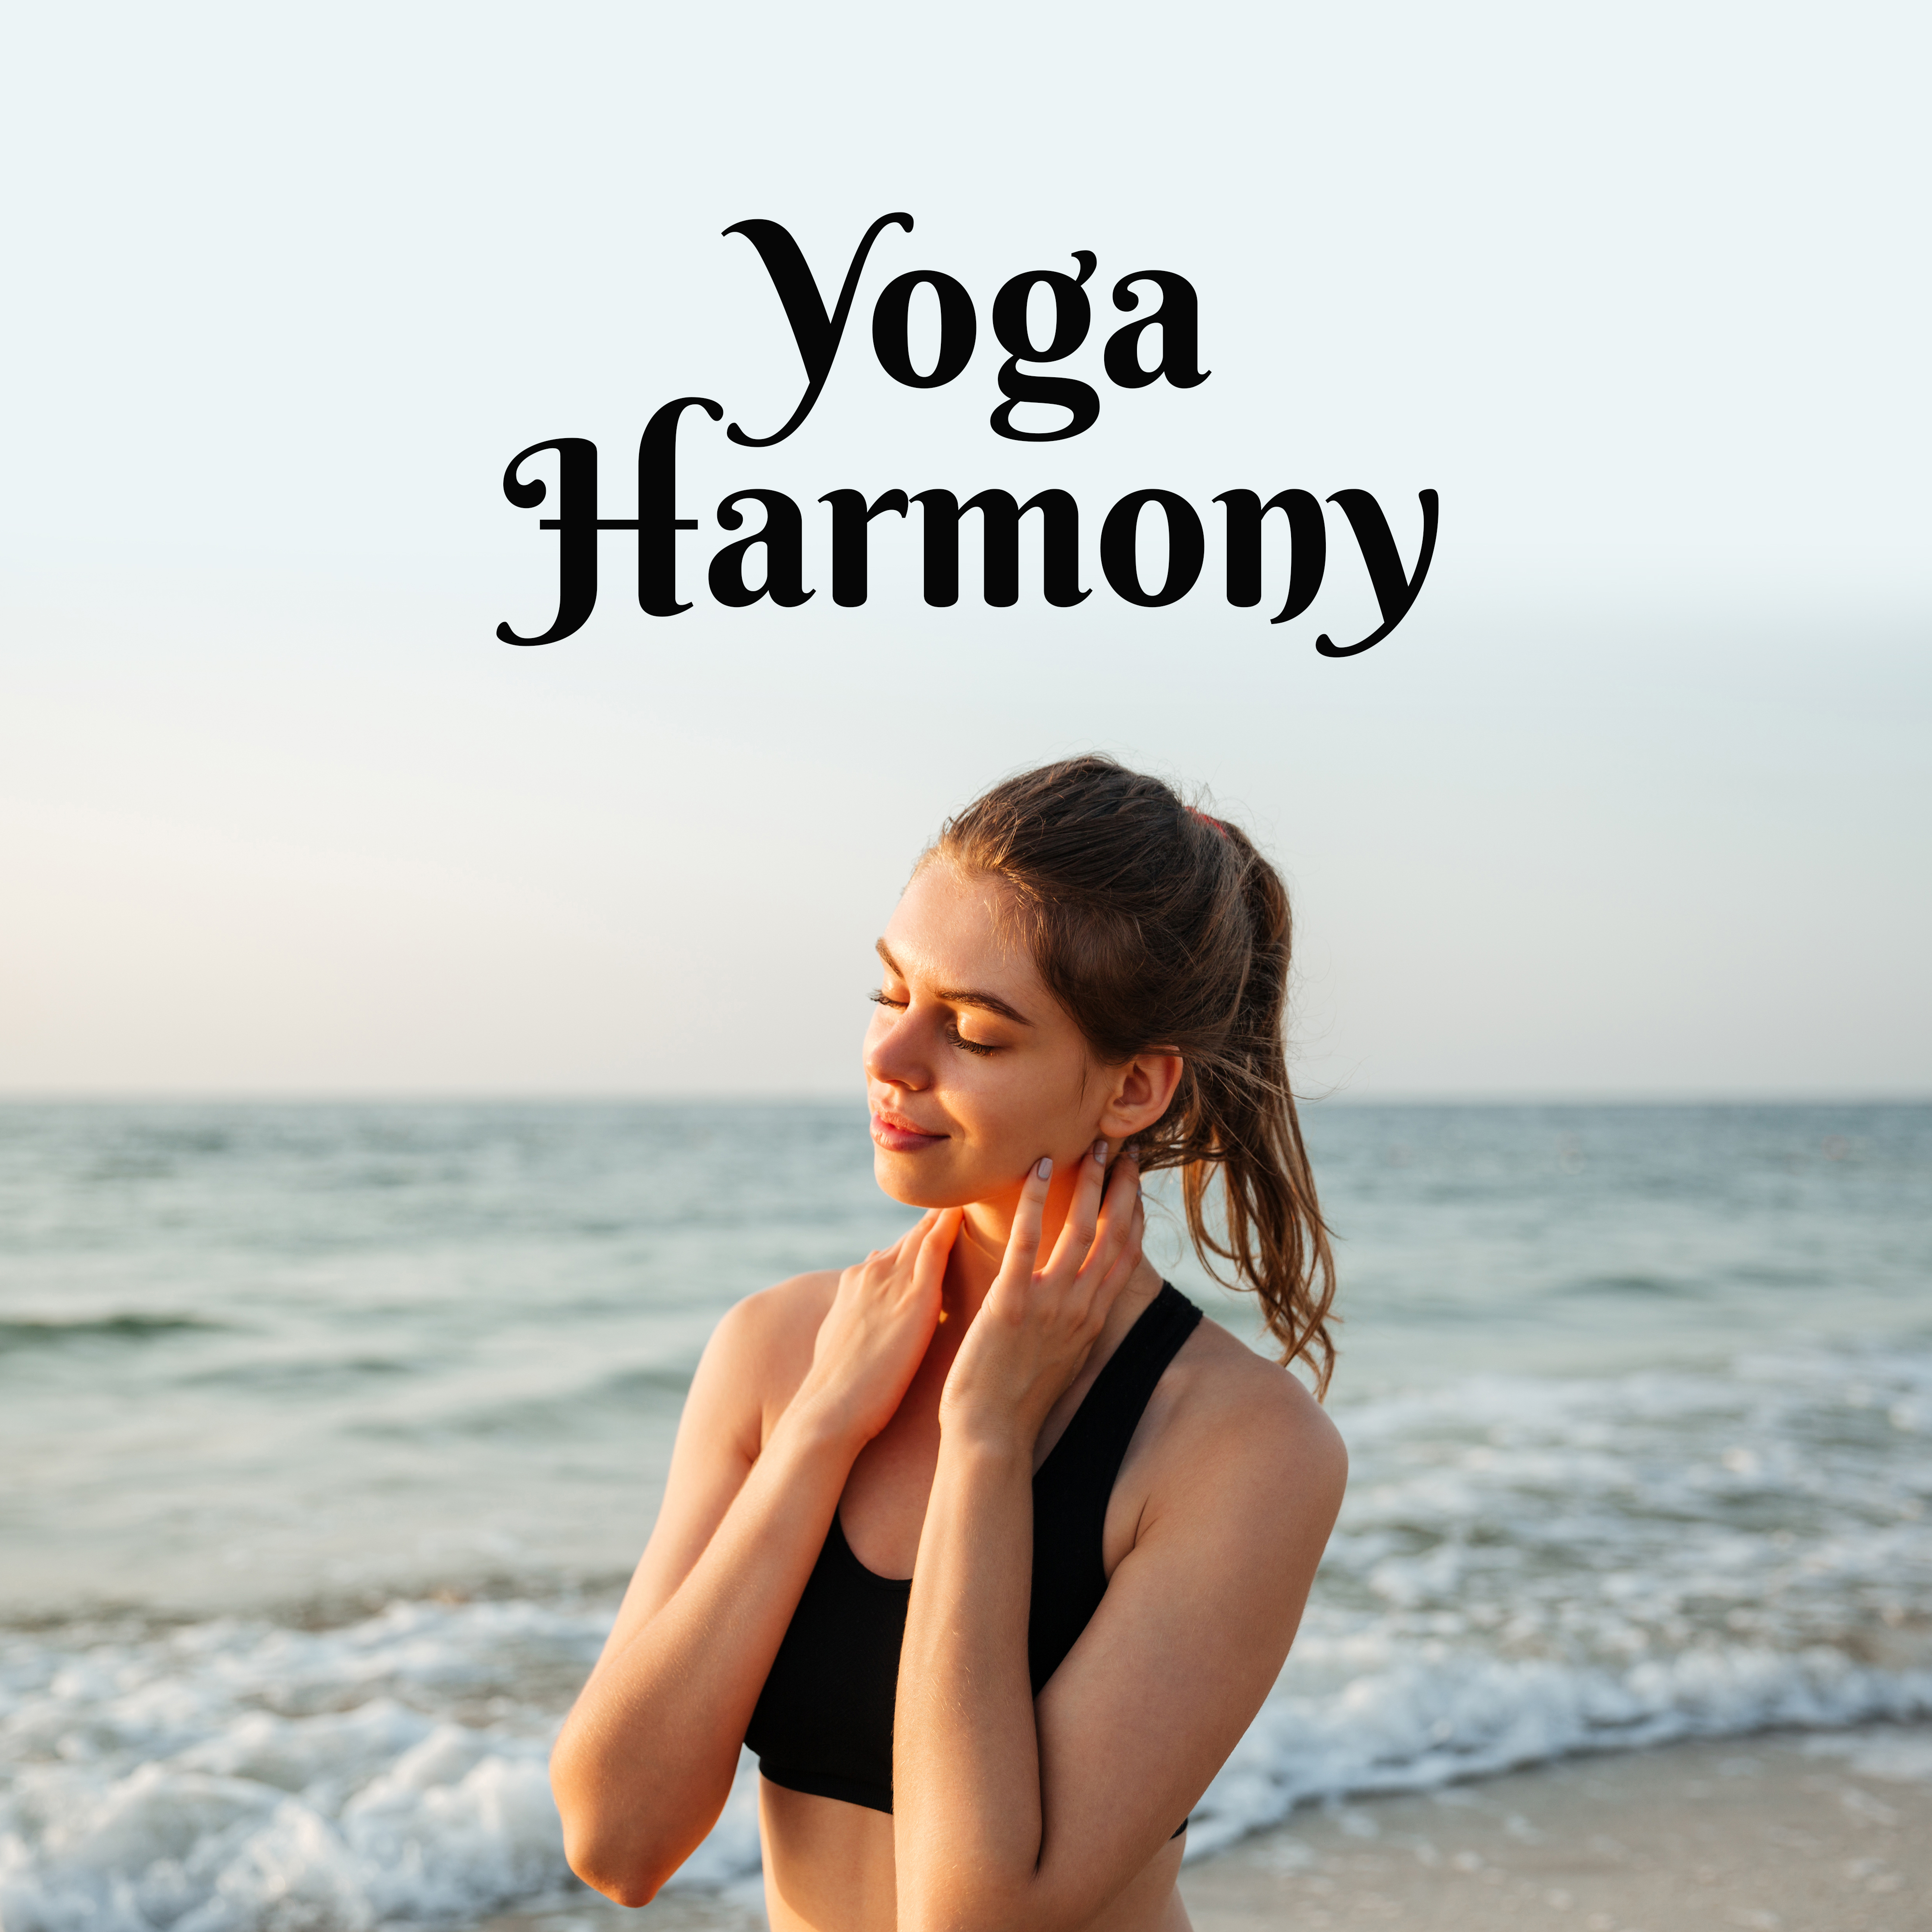 Yoga Harmony  Meditation Music, Helpful for Yoga, Zen, Kundalini, Rest